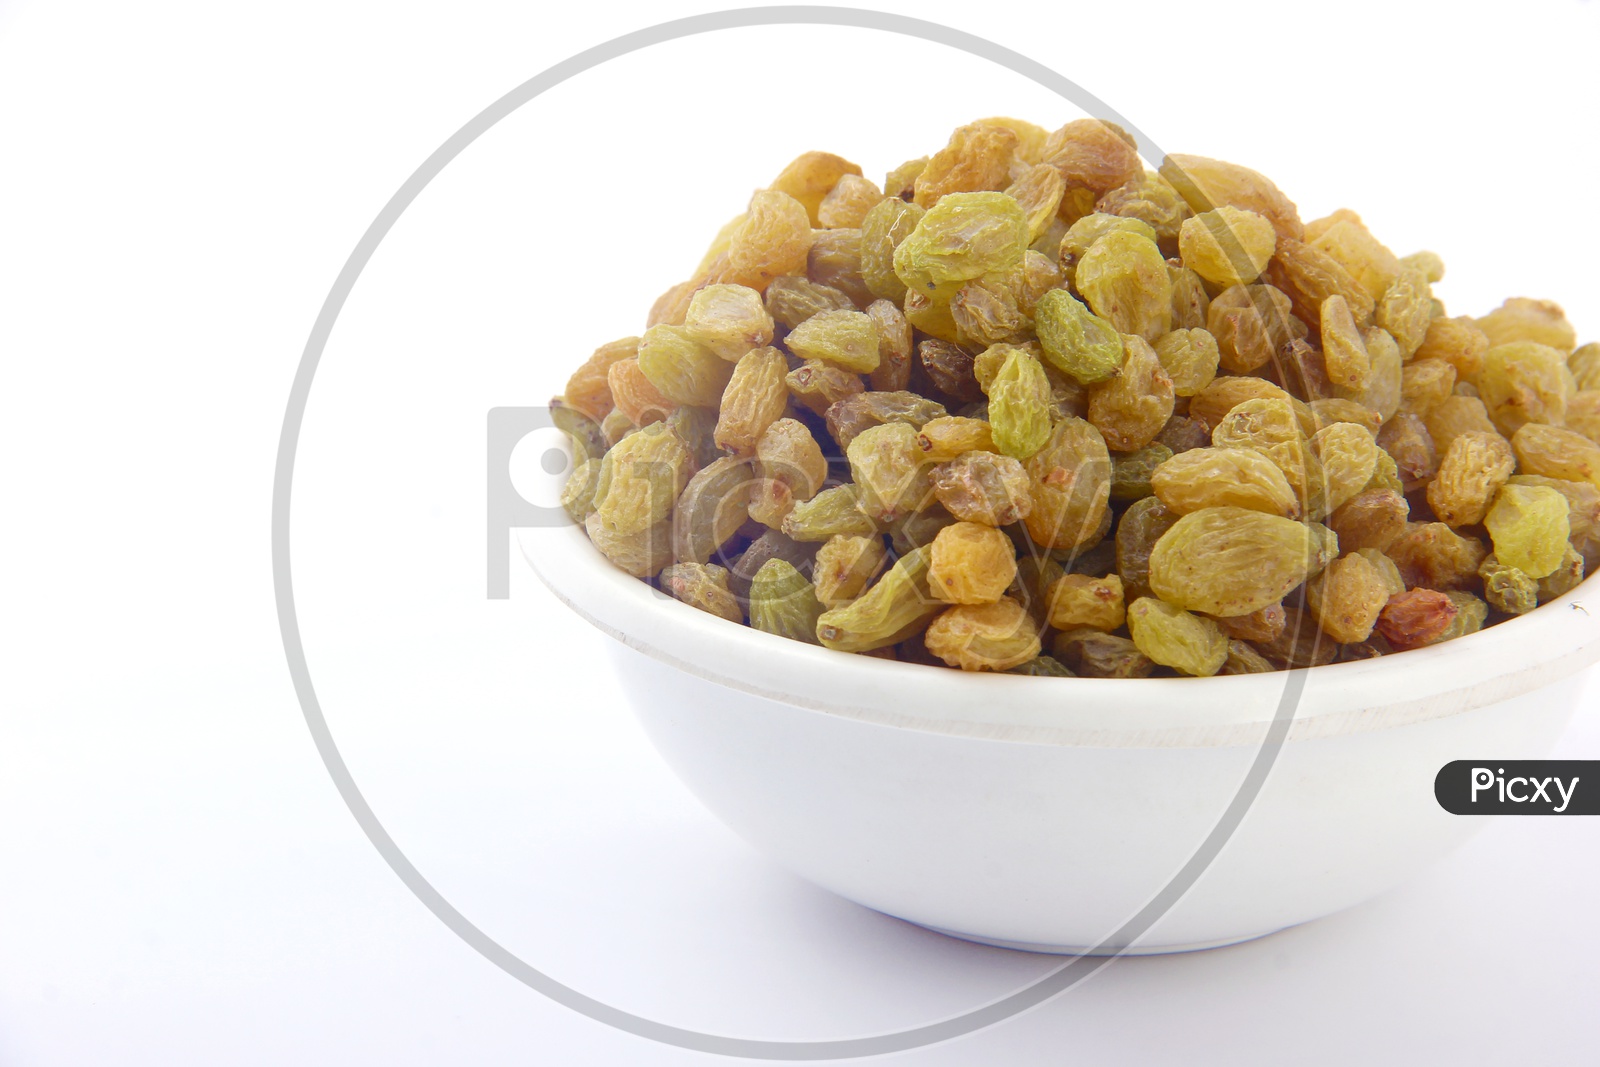 Bowl of Raisins / raisins in a Bowl with Raisins in Background